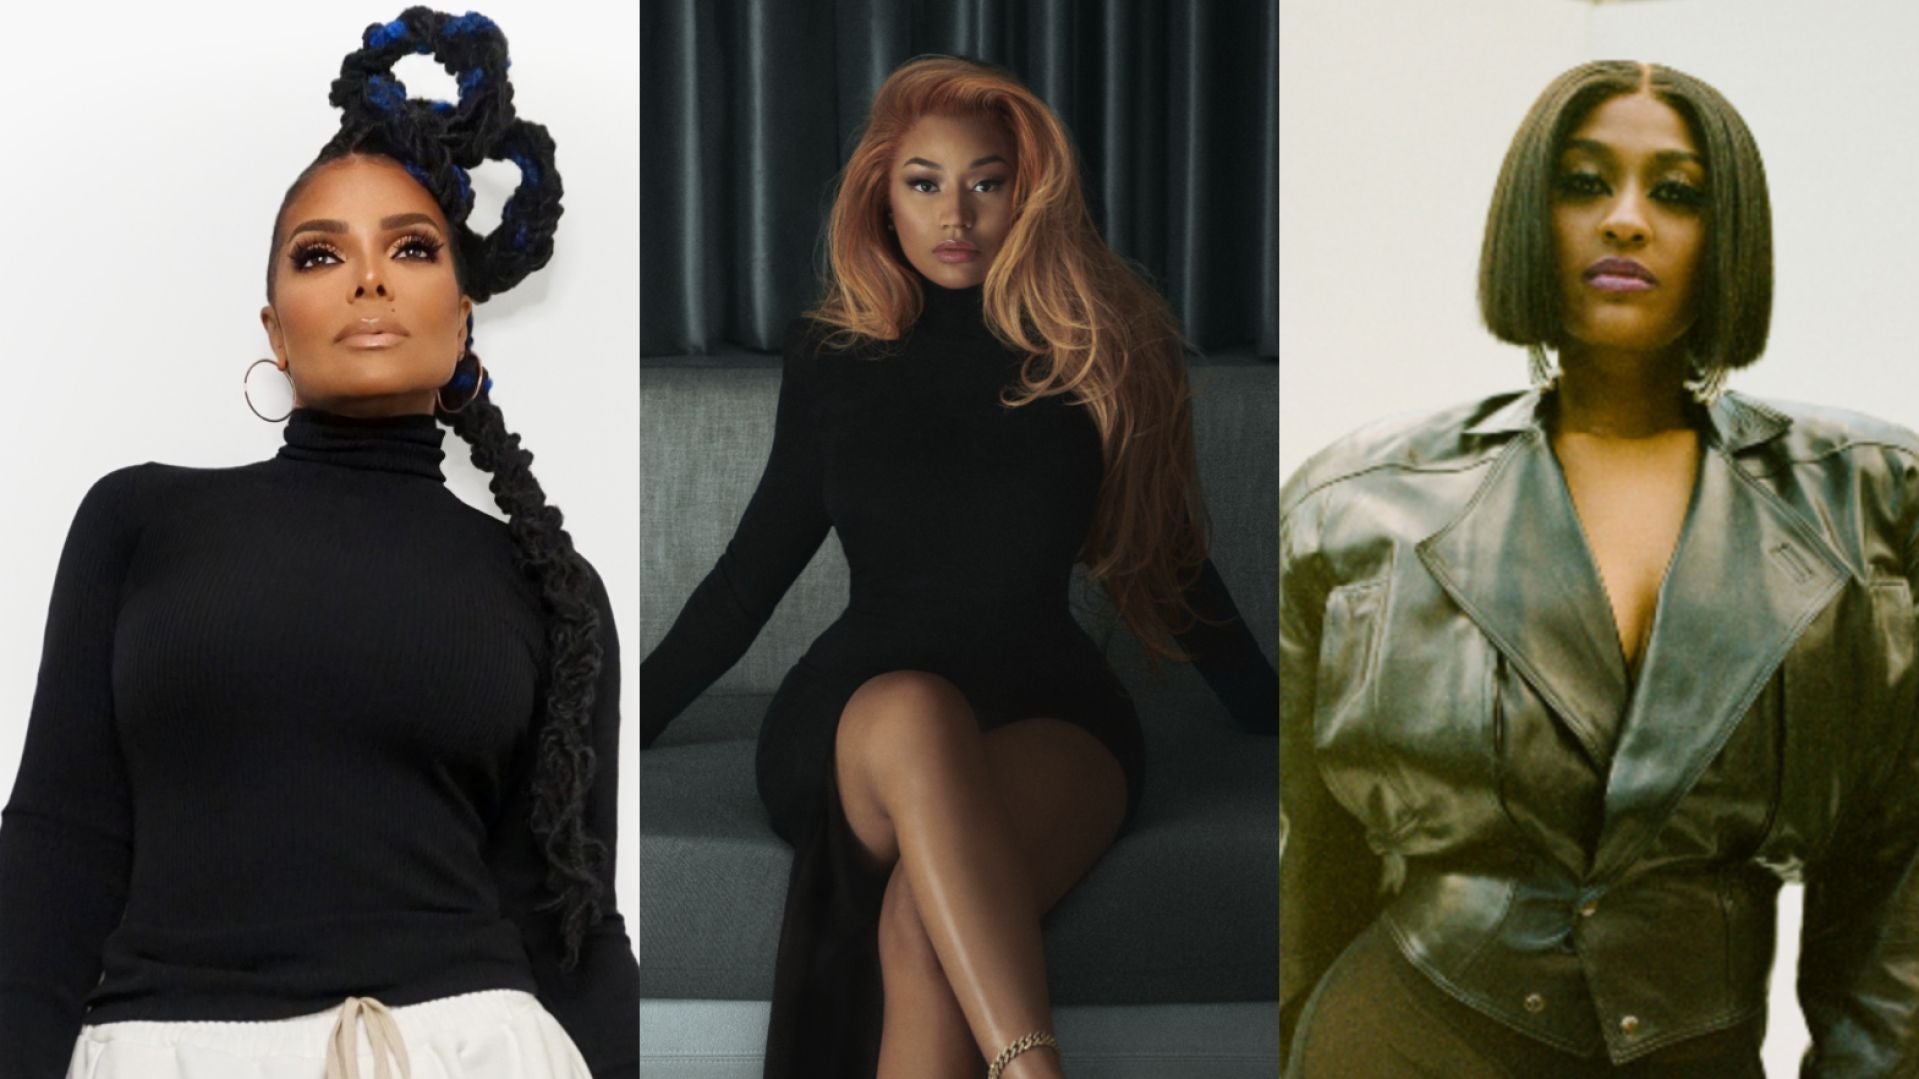 ESSENCE Festival 2022: Janet Jackson, Nicki Minaj, Jazmine Sullivan & More! See The Lineup So Far